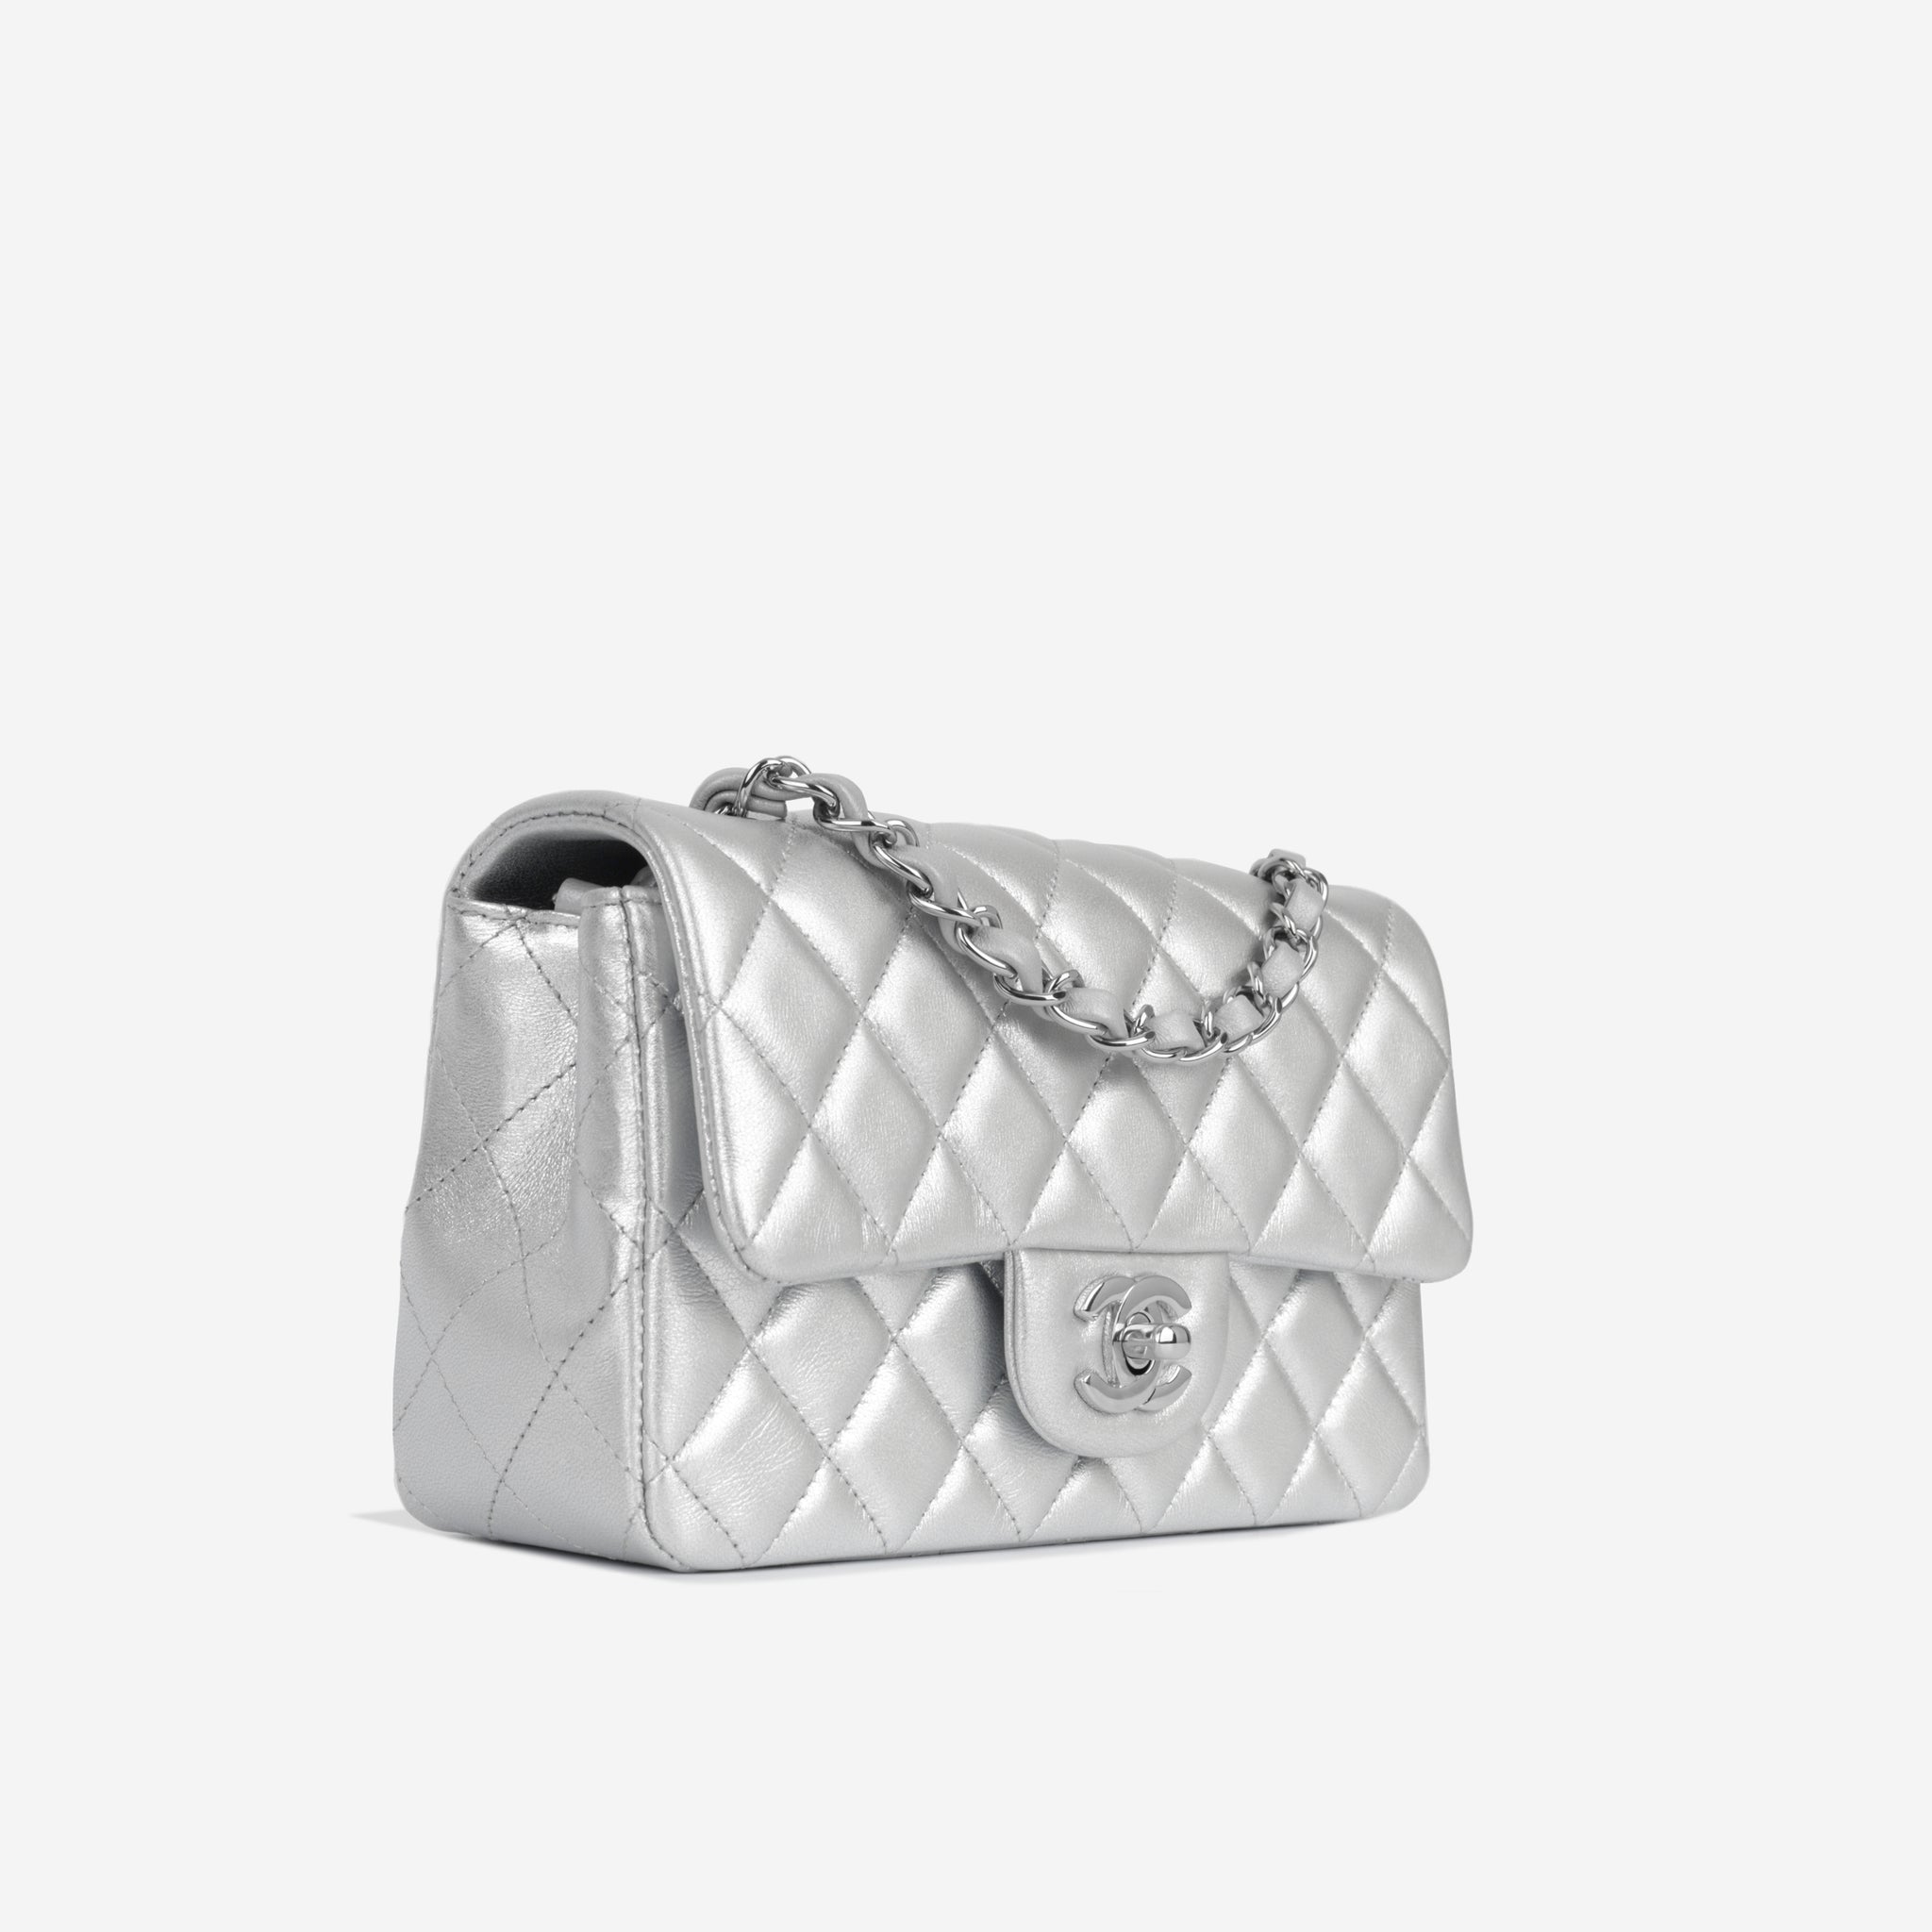 CHANEL TIMELESS CLASSICS Classic Chanel CF 19cm Mini Flap Bag Heart Chain  Lambskin Black